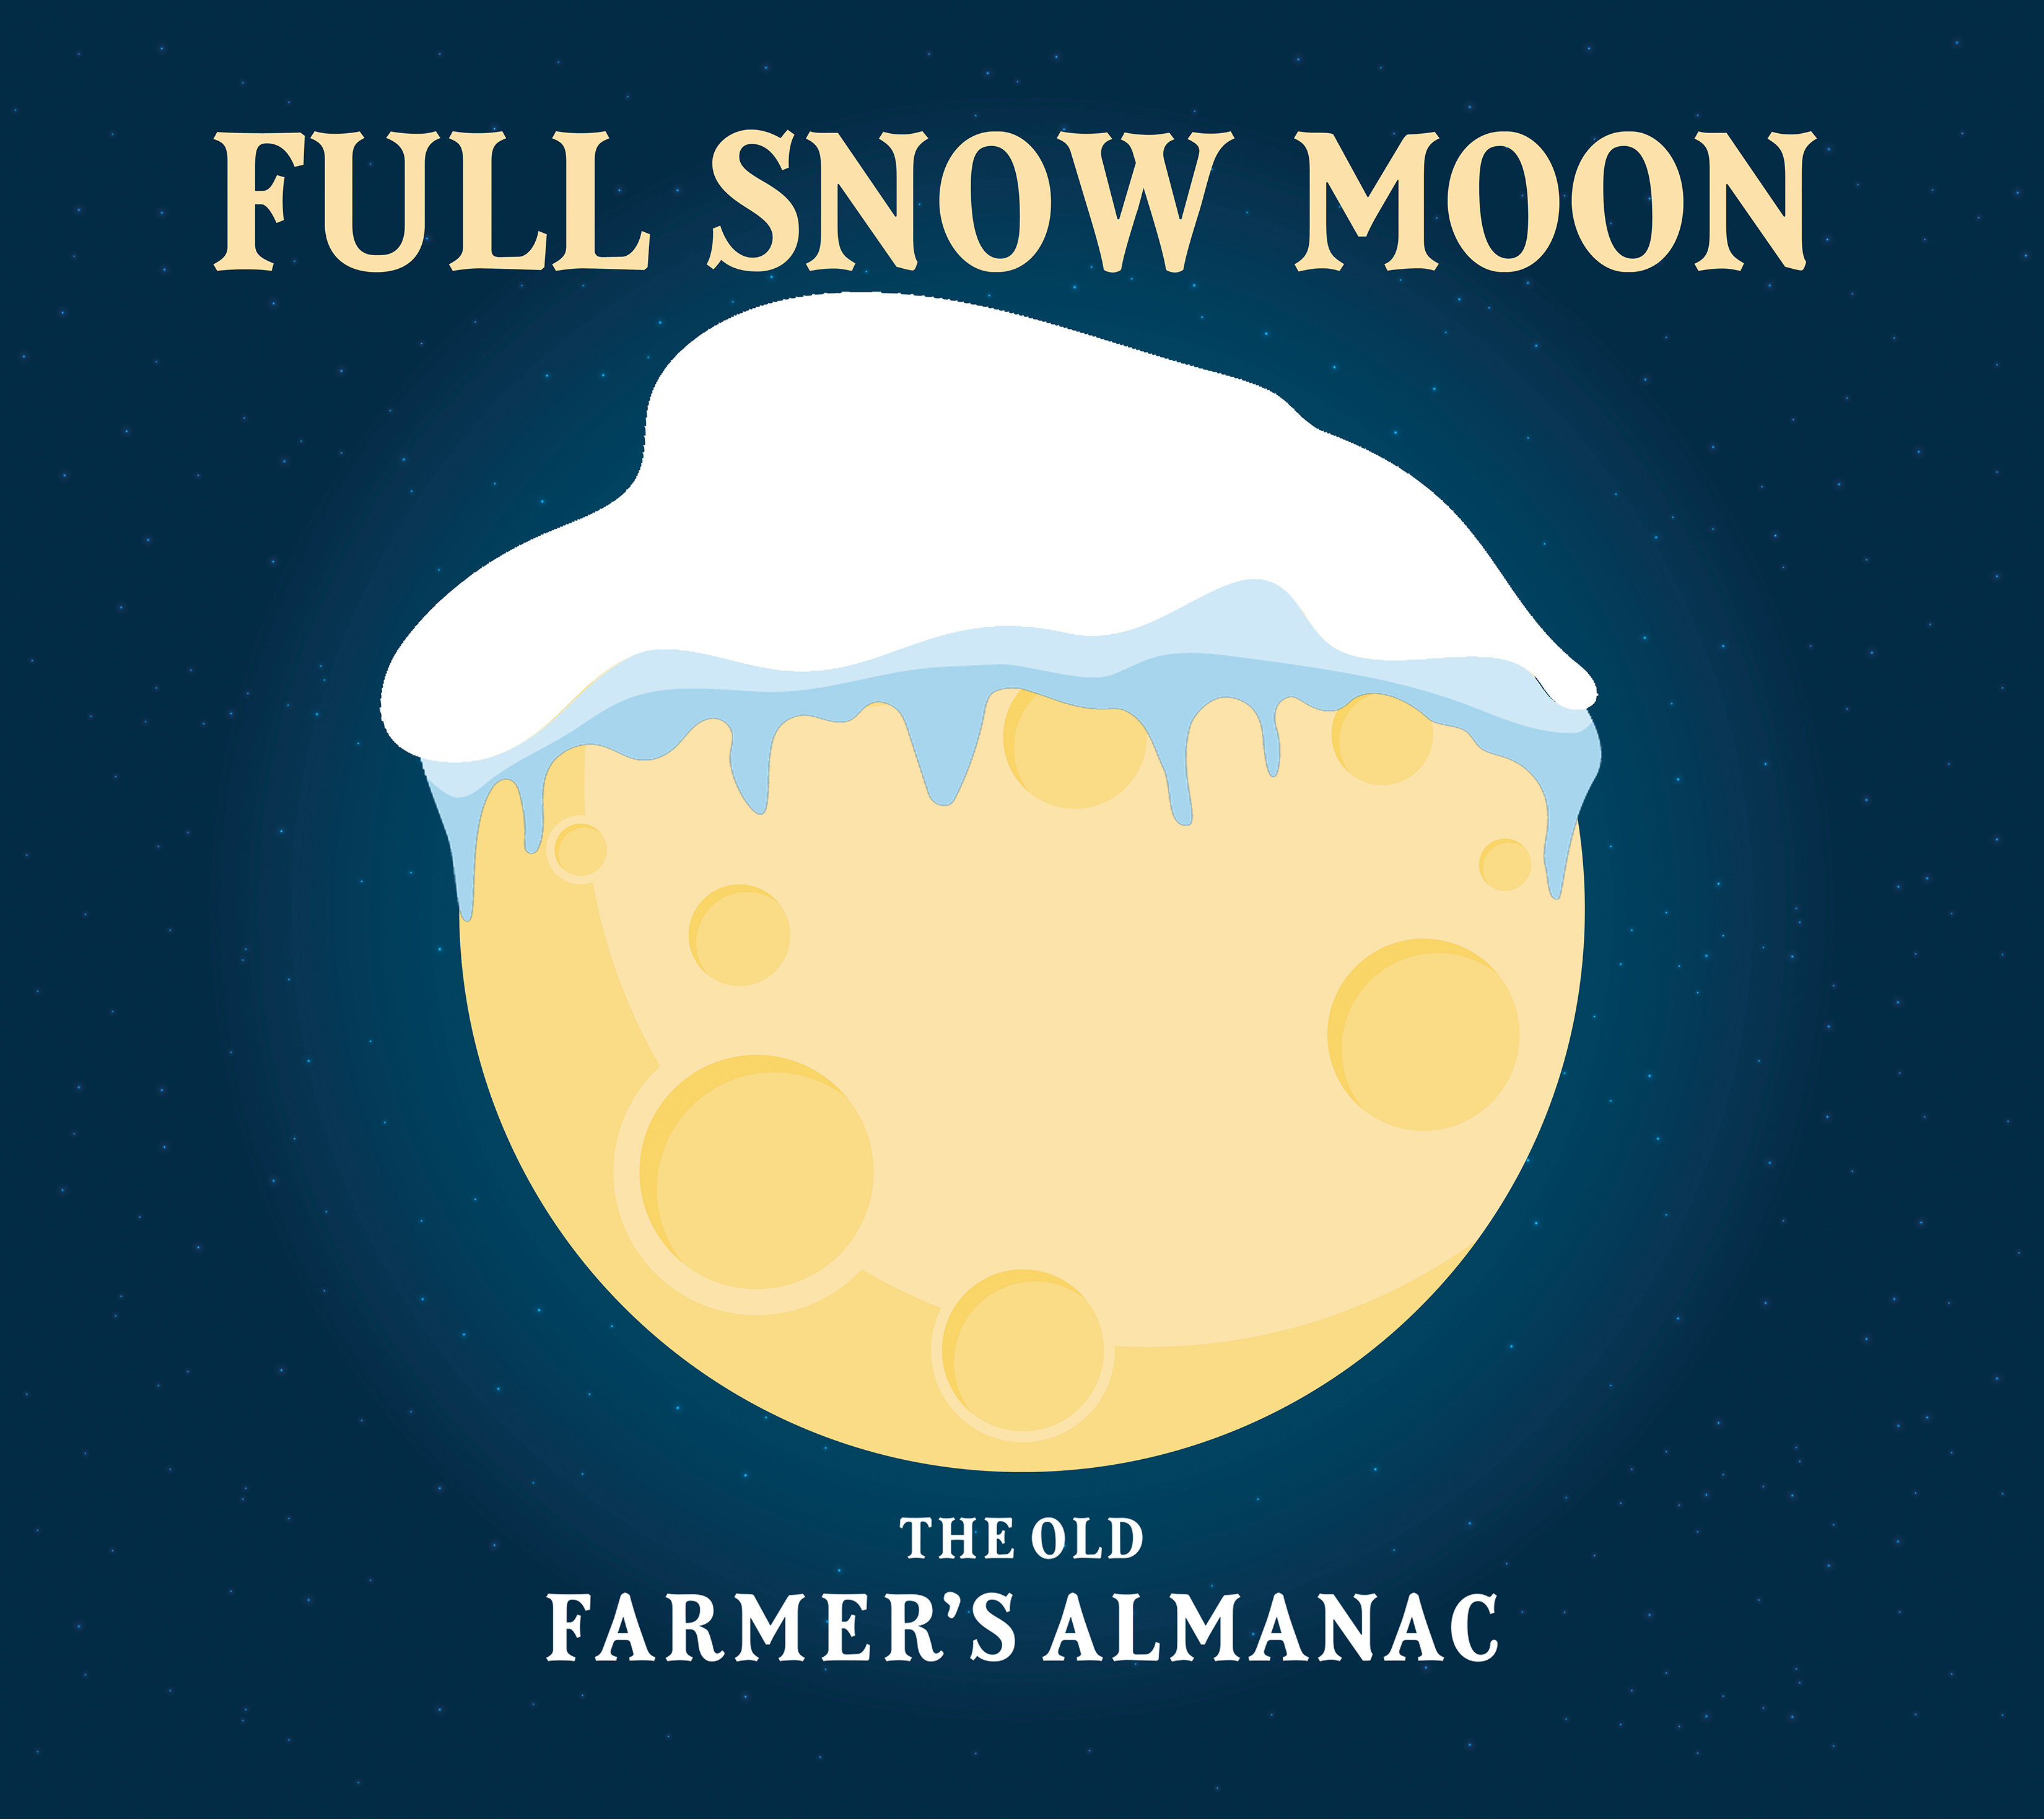 Full Moon in February 2020: See the Full Snow Moon | The Old Farmer's Almanac3300 x 2937